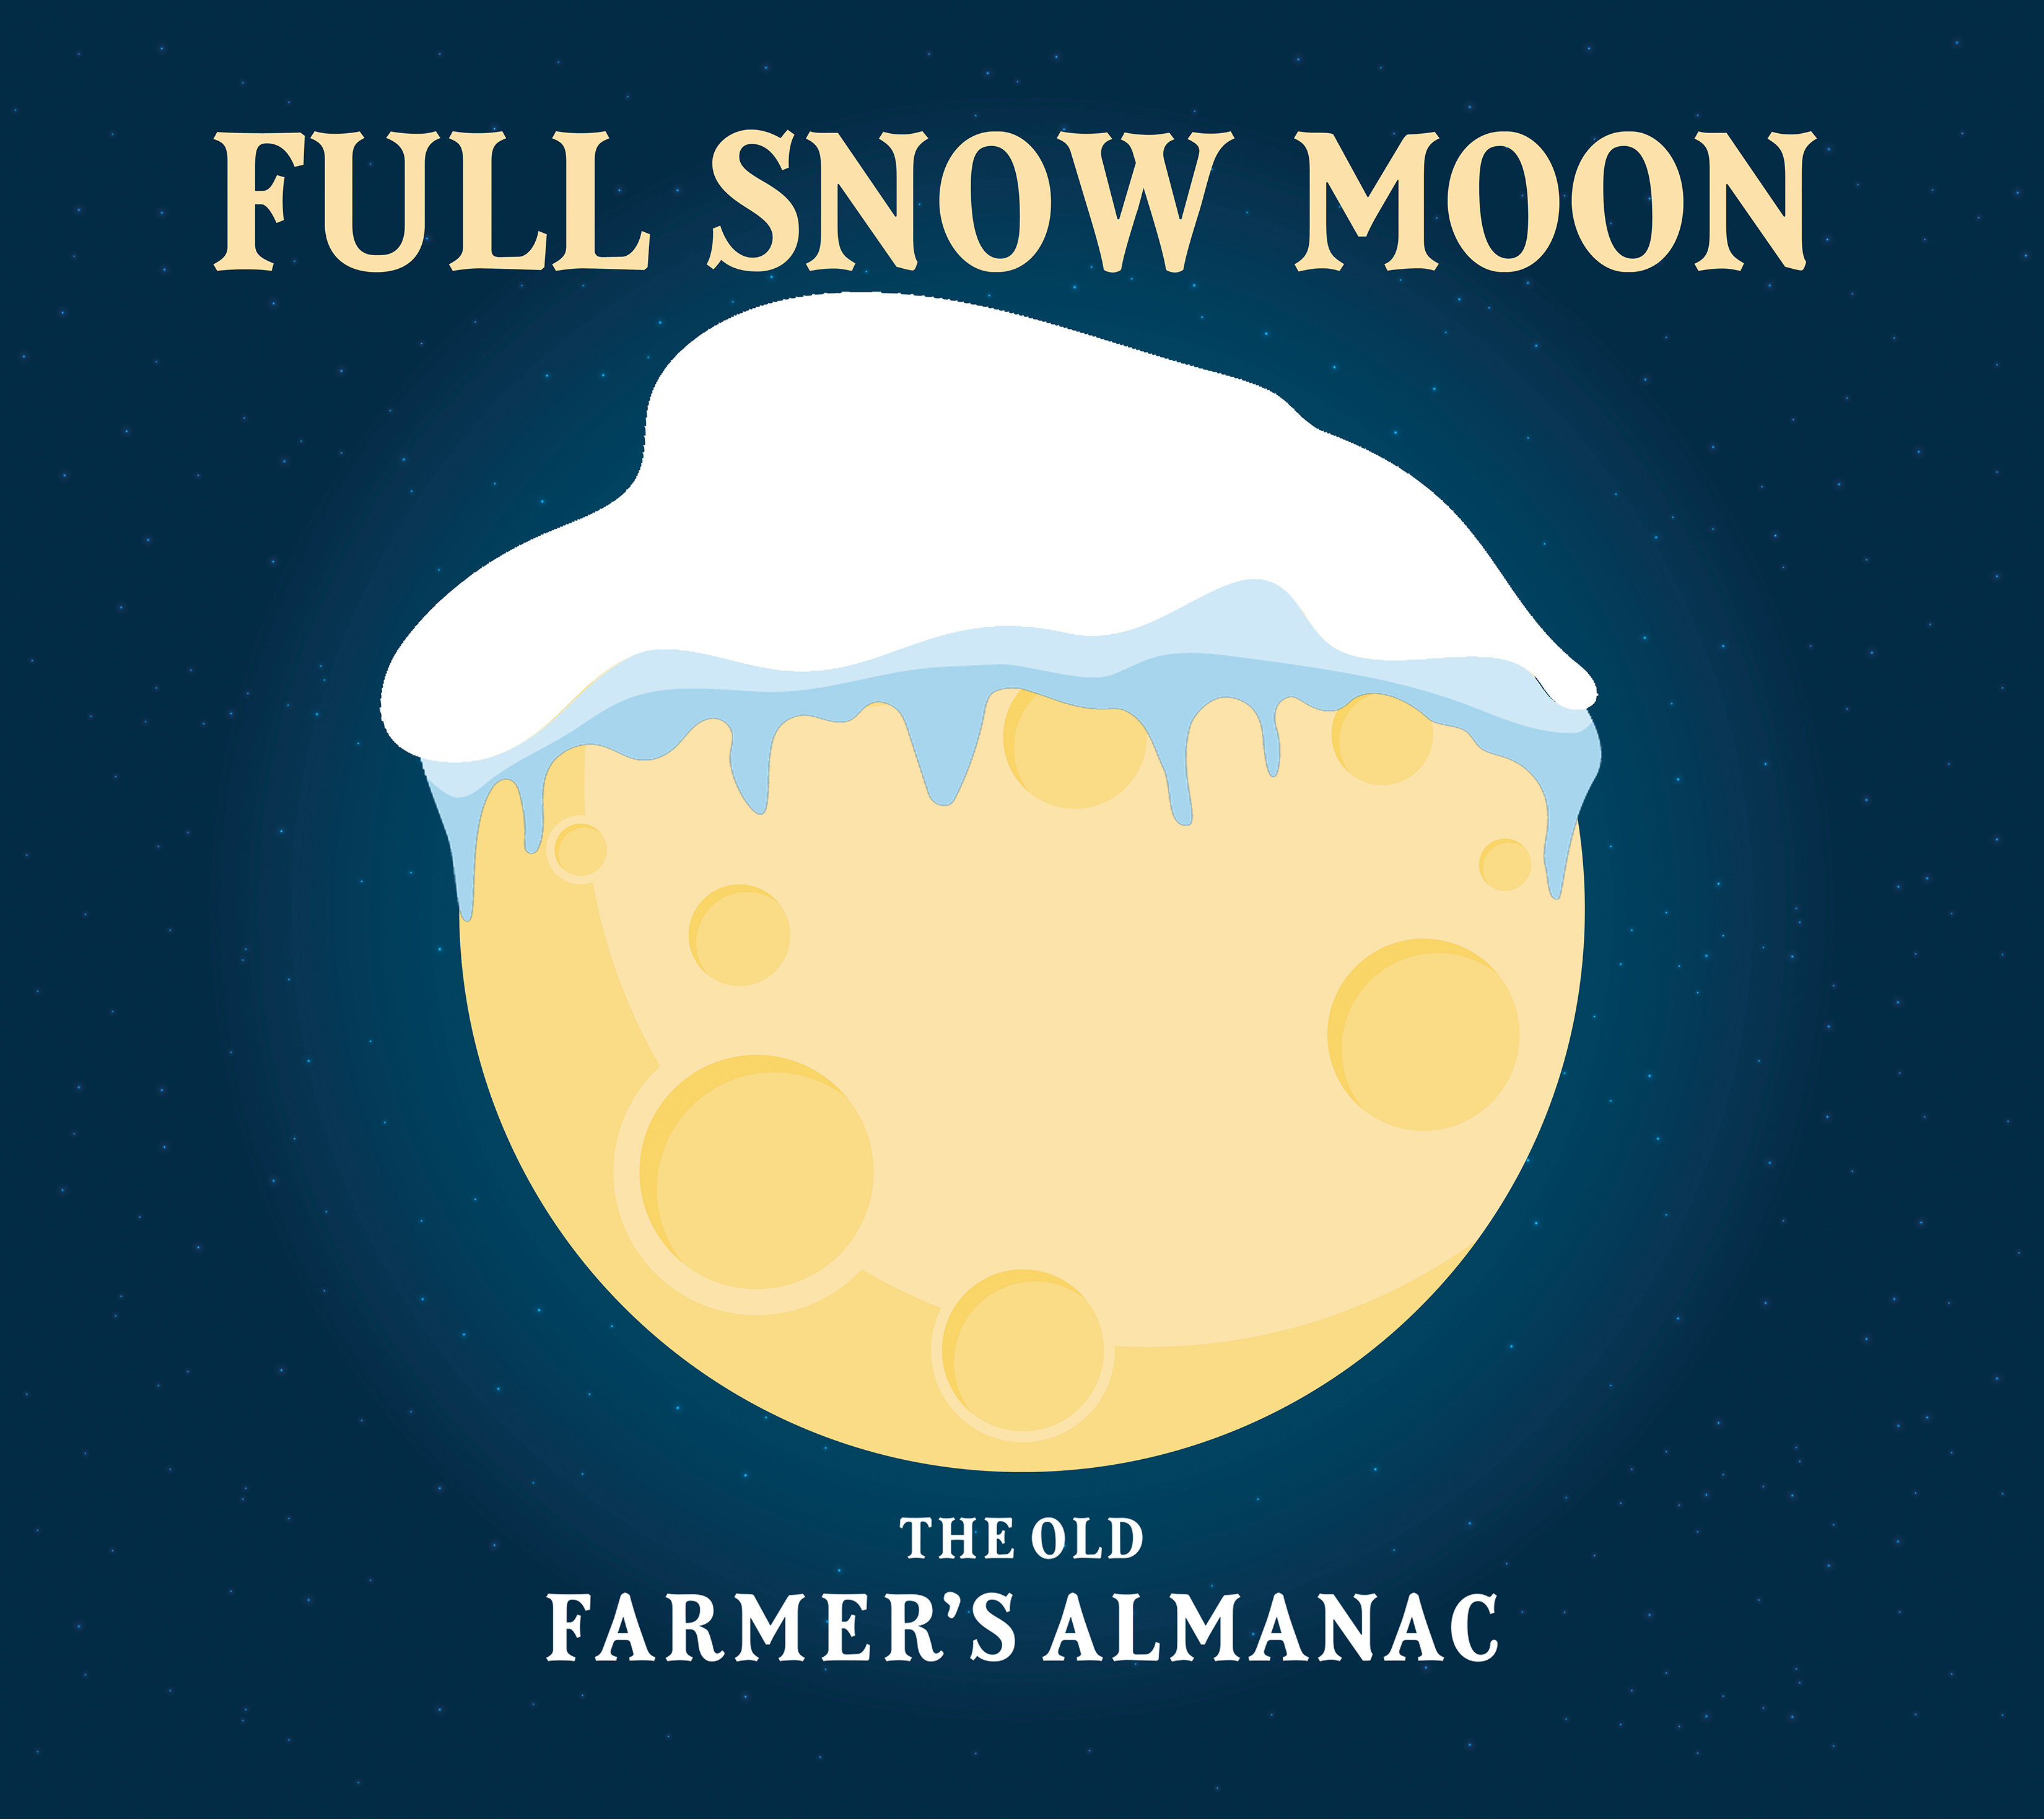 Full Moon in February 2020: See the Full Snow Moon | The Old Farmer's Almanac3300 x 2937